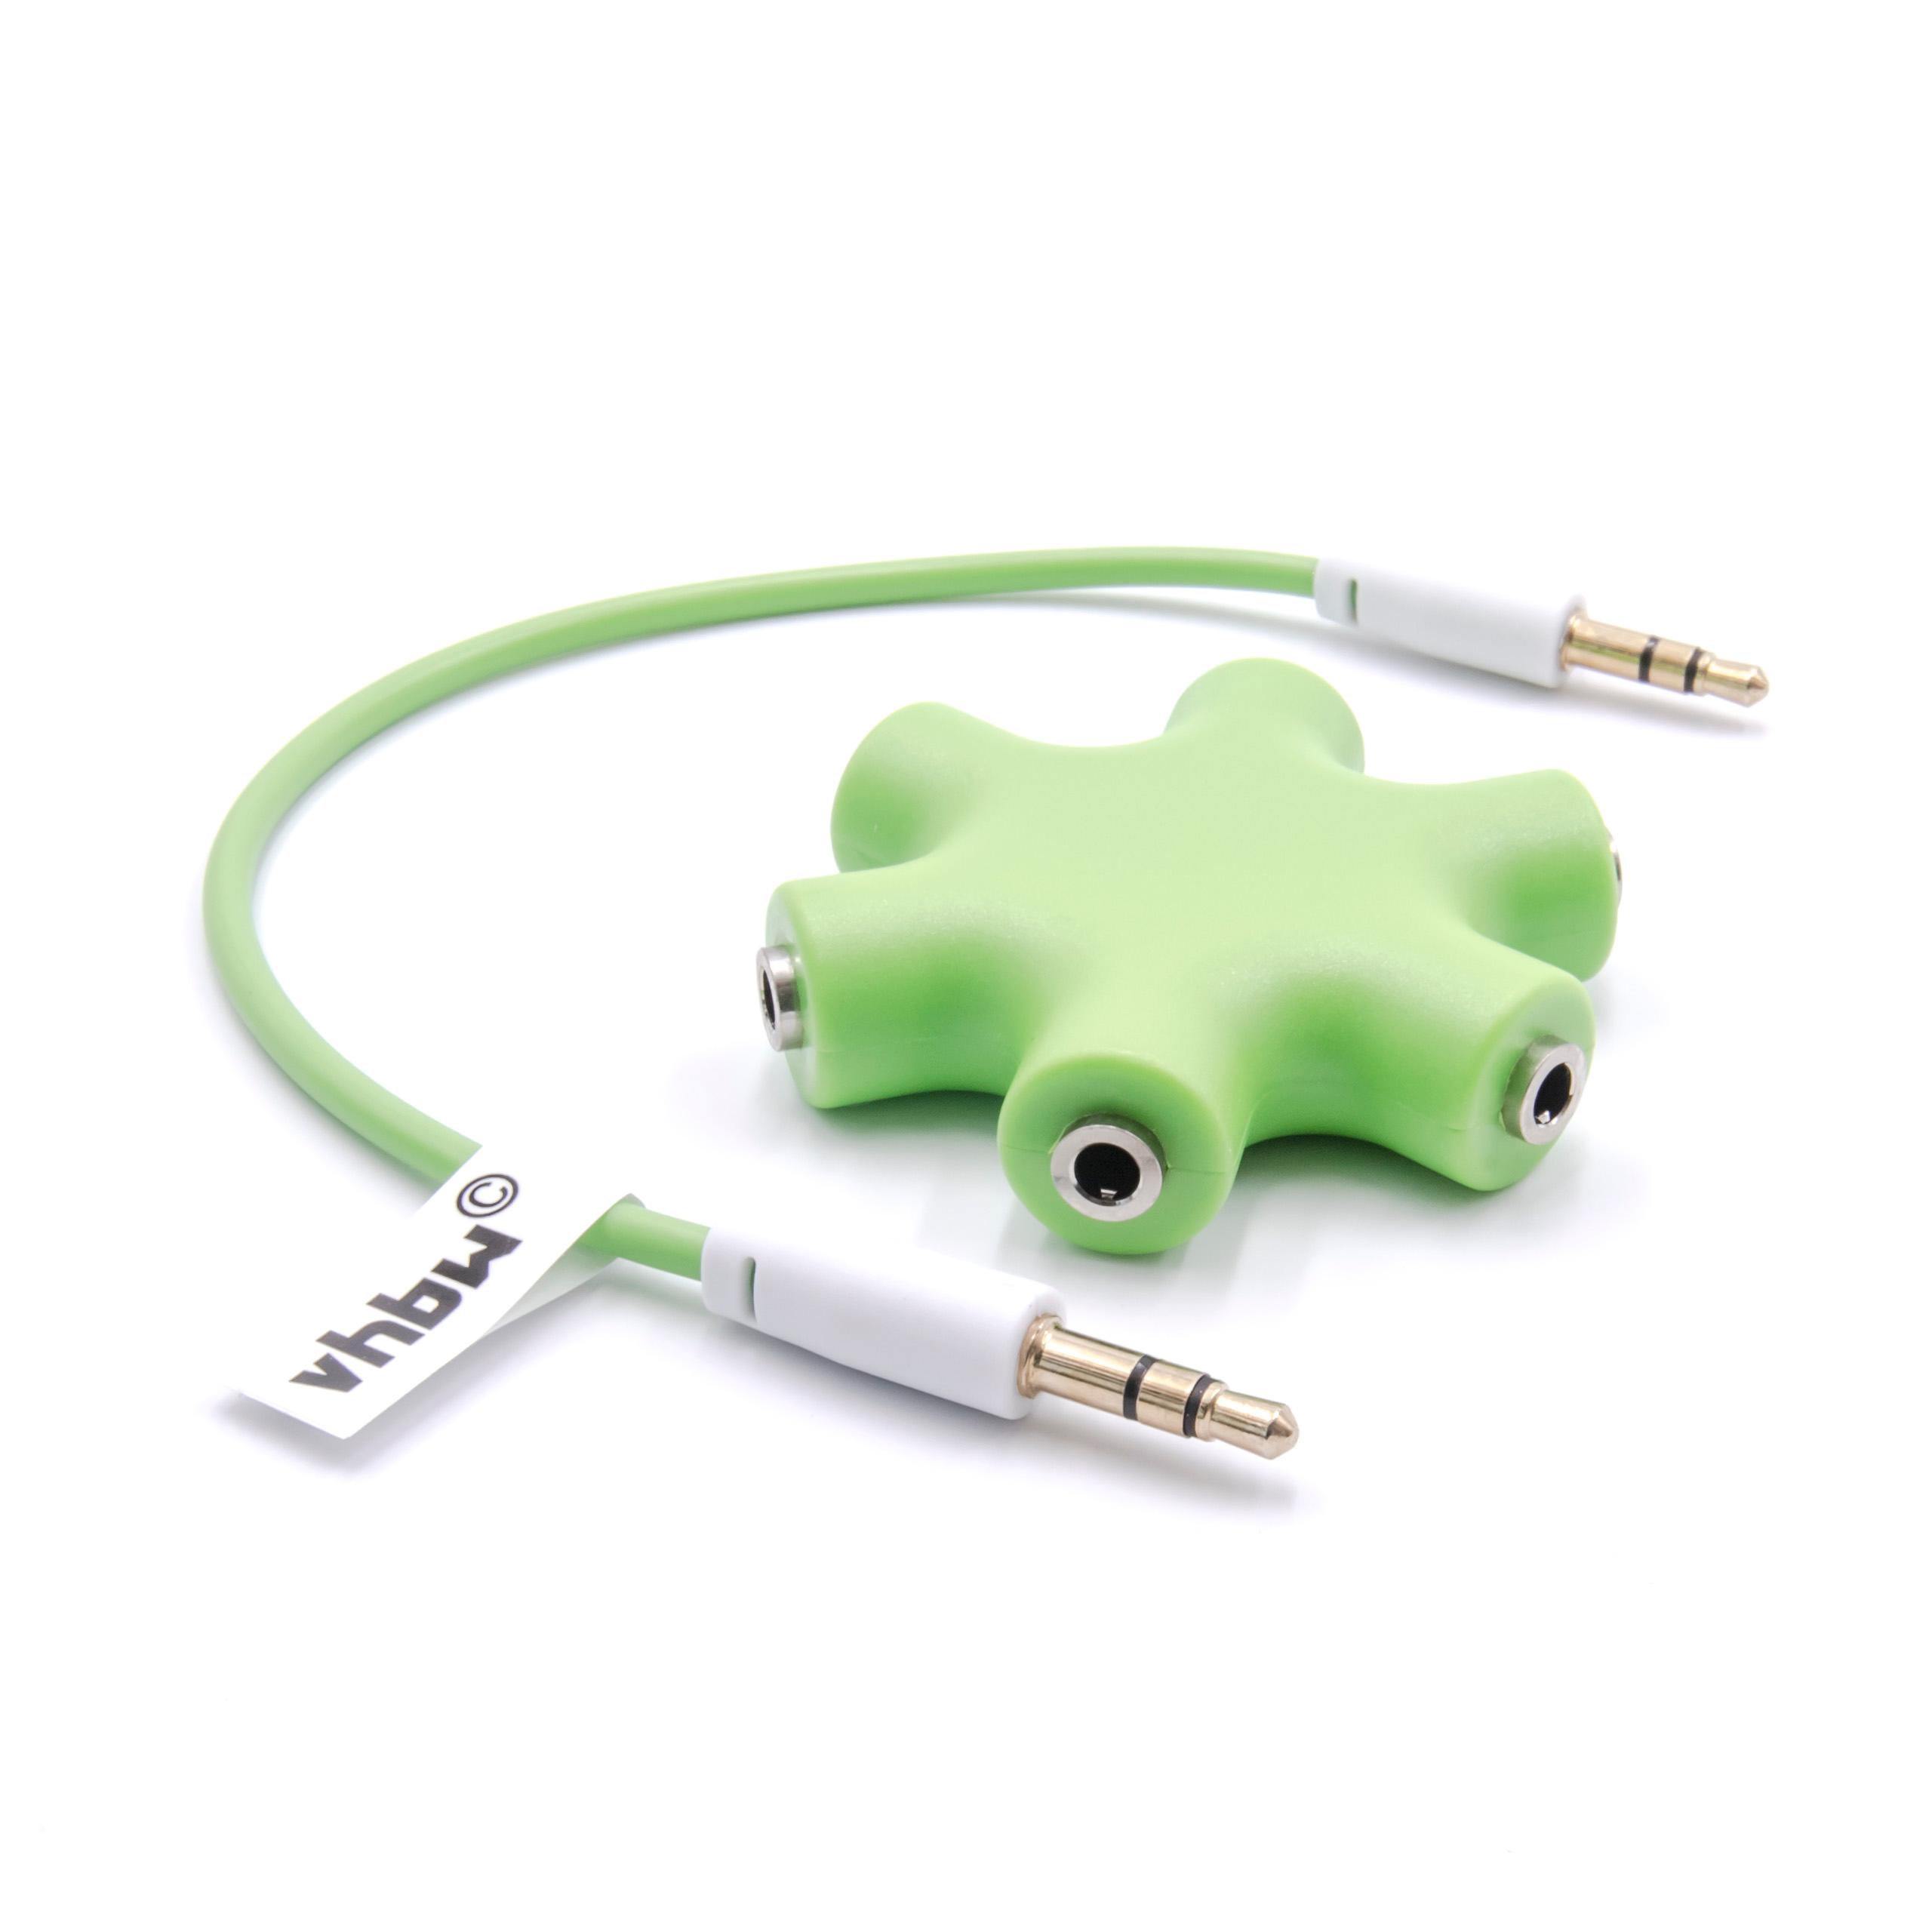 vhbw Multi Audio Splitter 5-Way AUX Headphone Splitter green for Headphones, Speakers, Devices with 3.5mm Audi